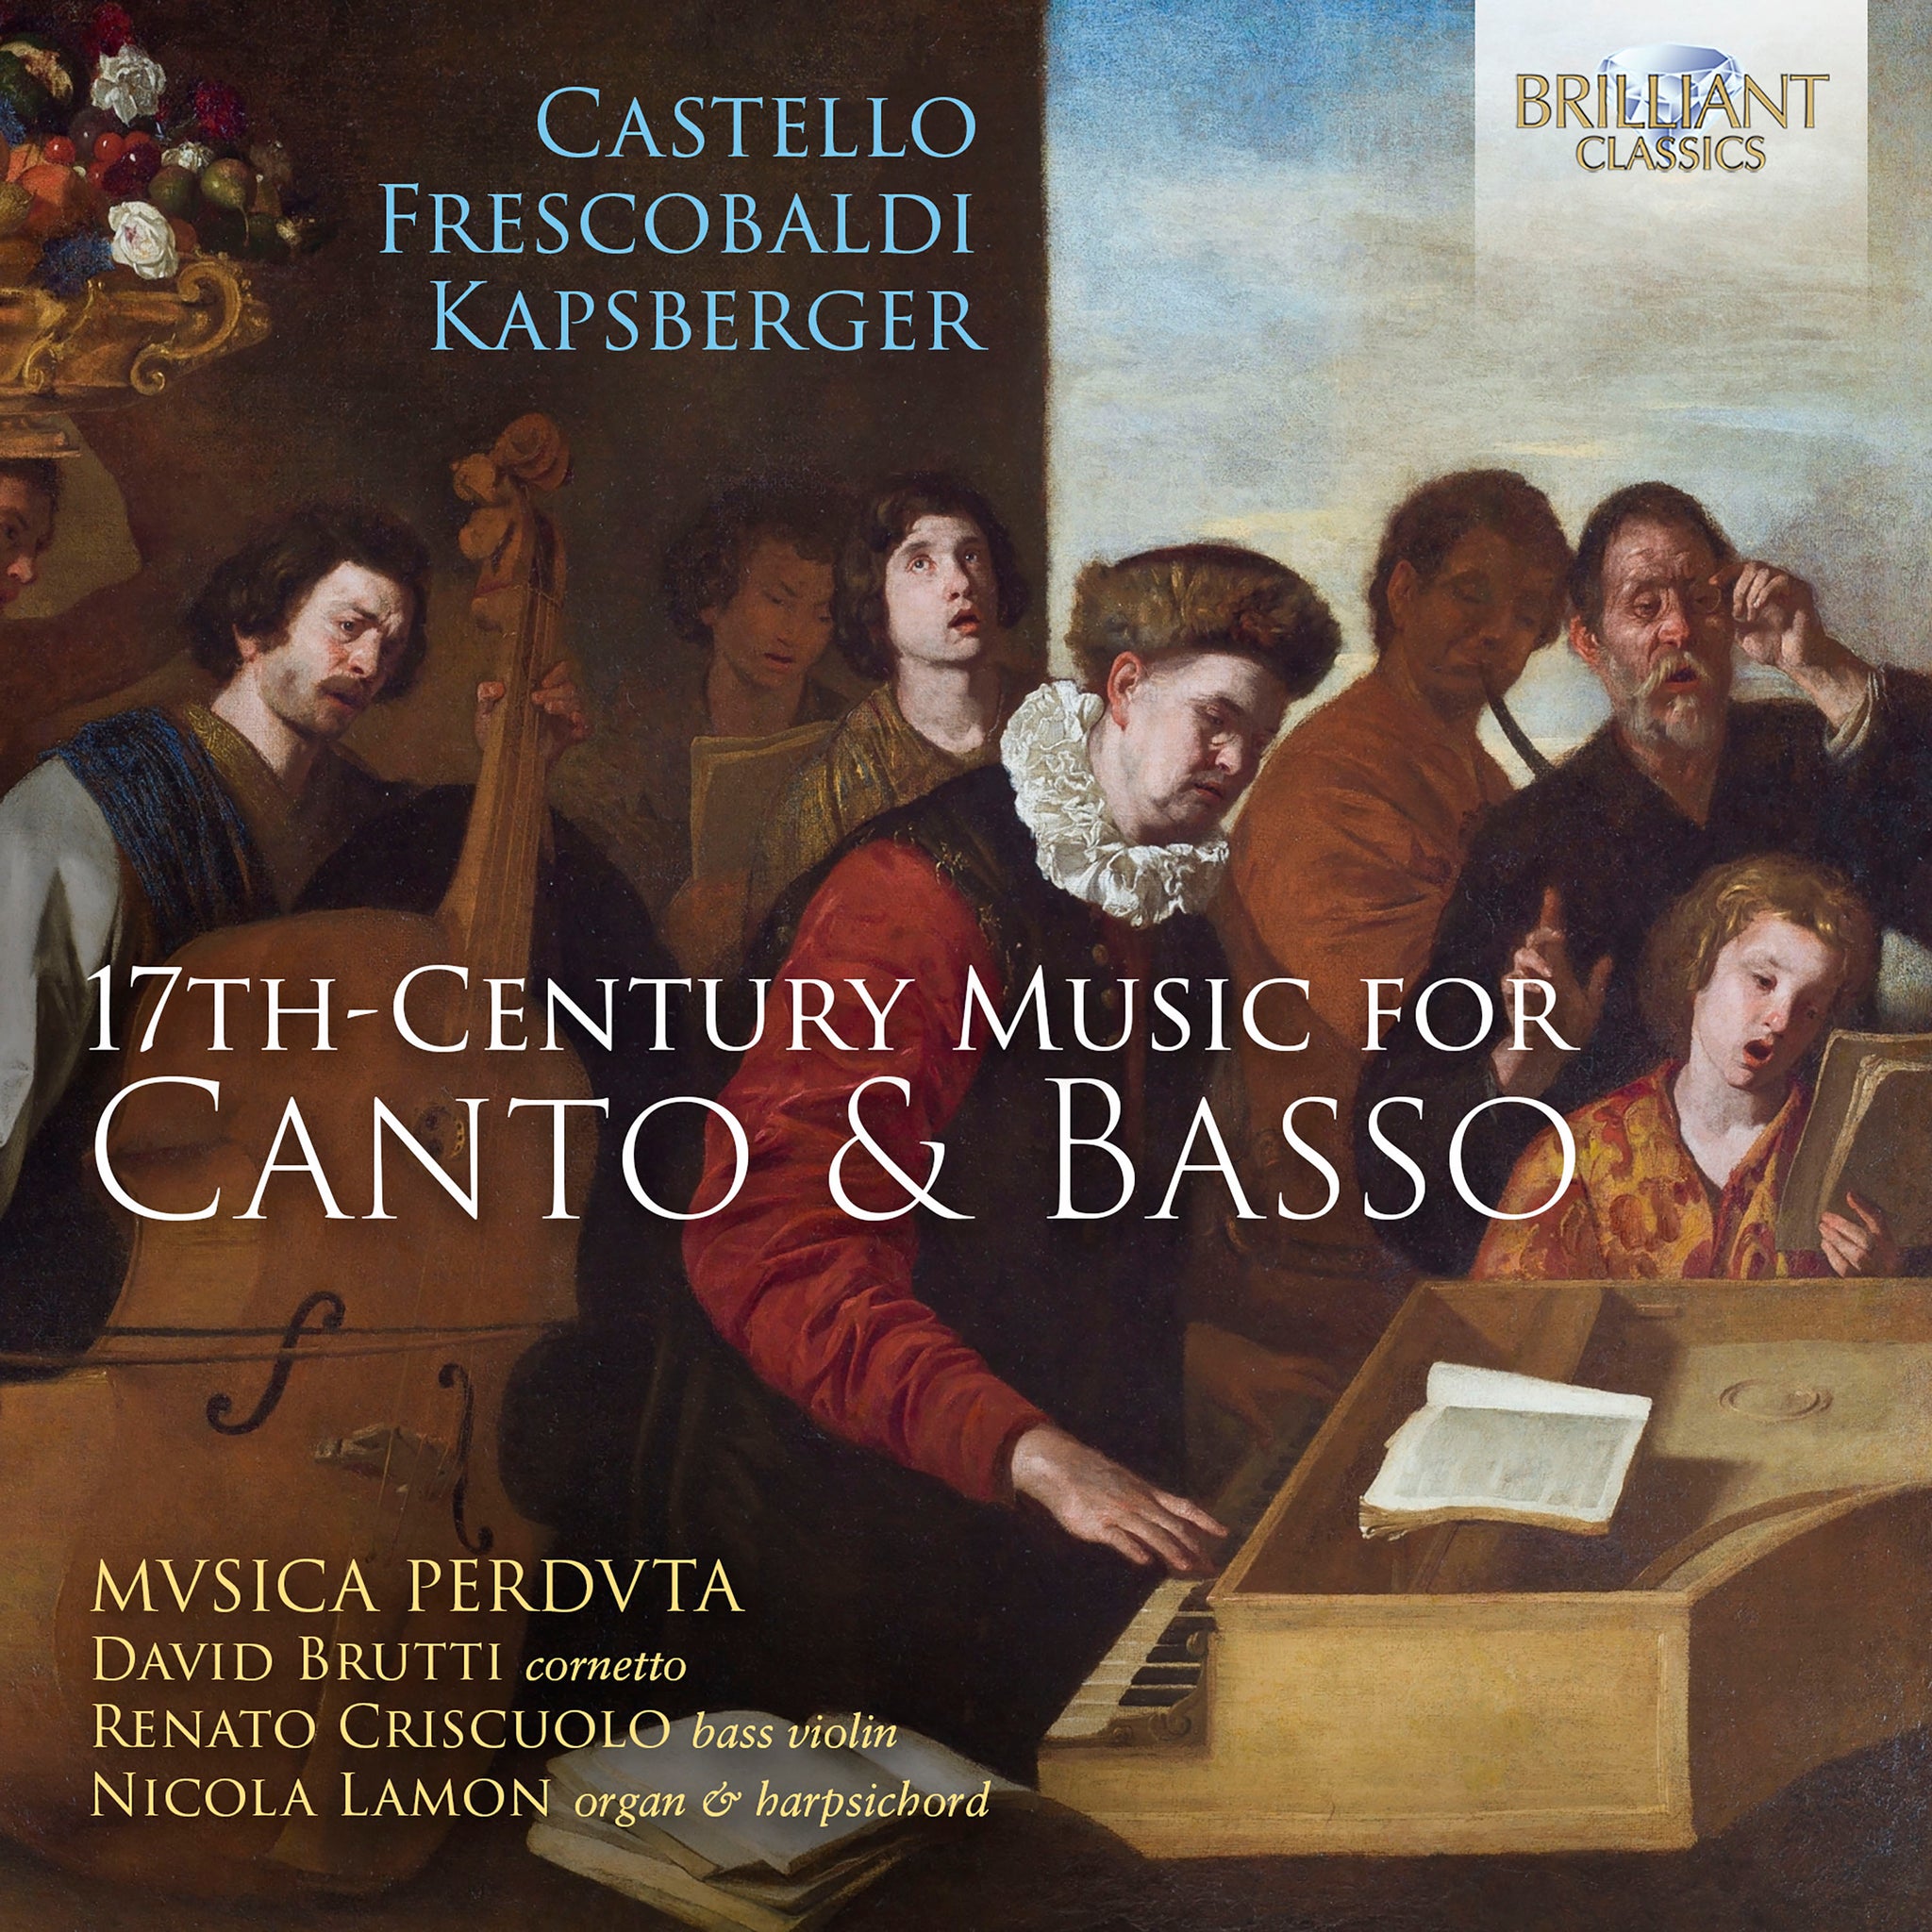 Castello, Frescobaldi & Kapsberger: "Canto & Basso" Sonatas / Mvsica Perdvta